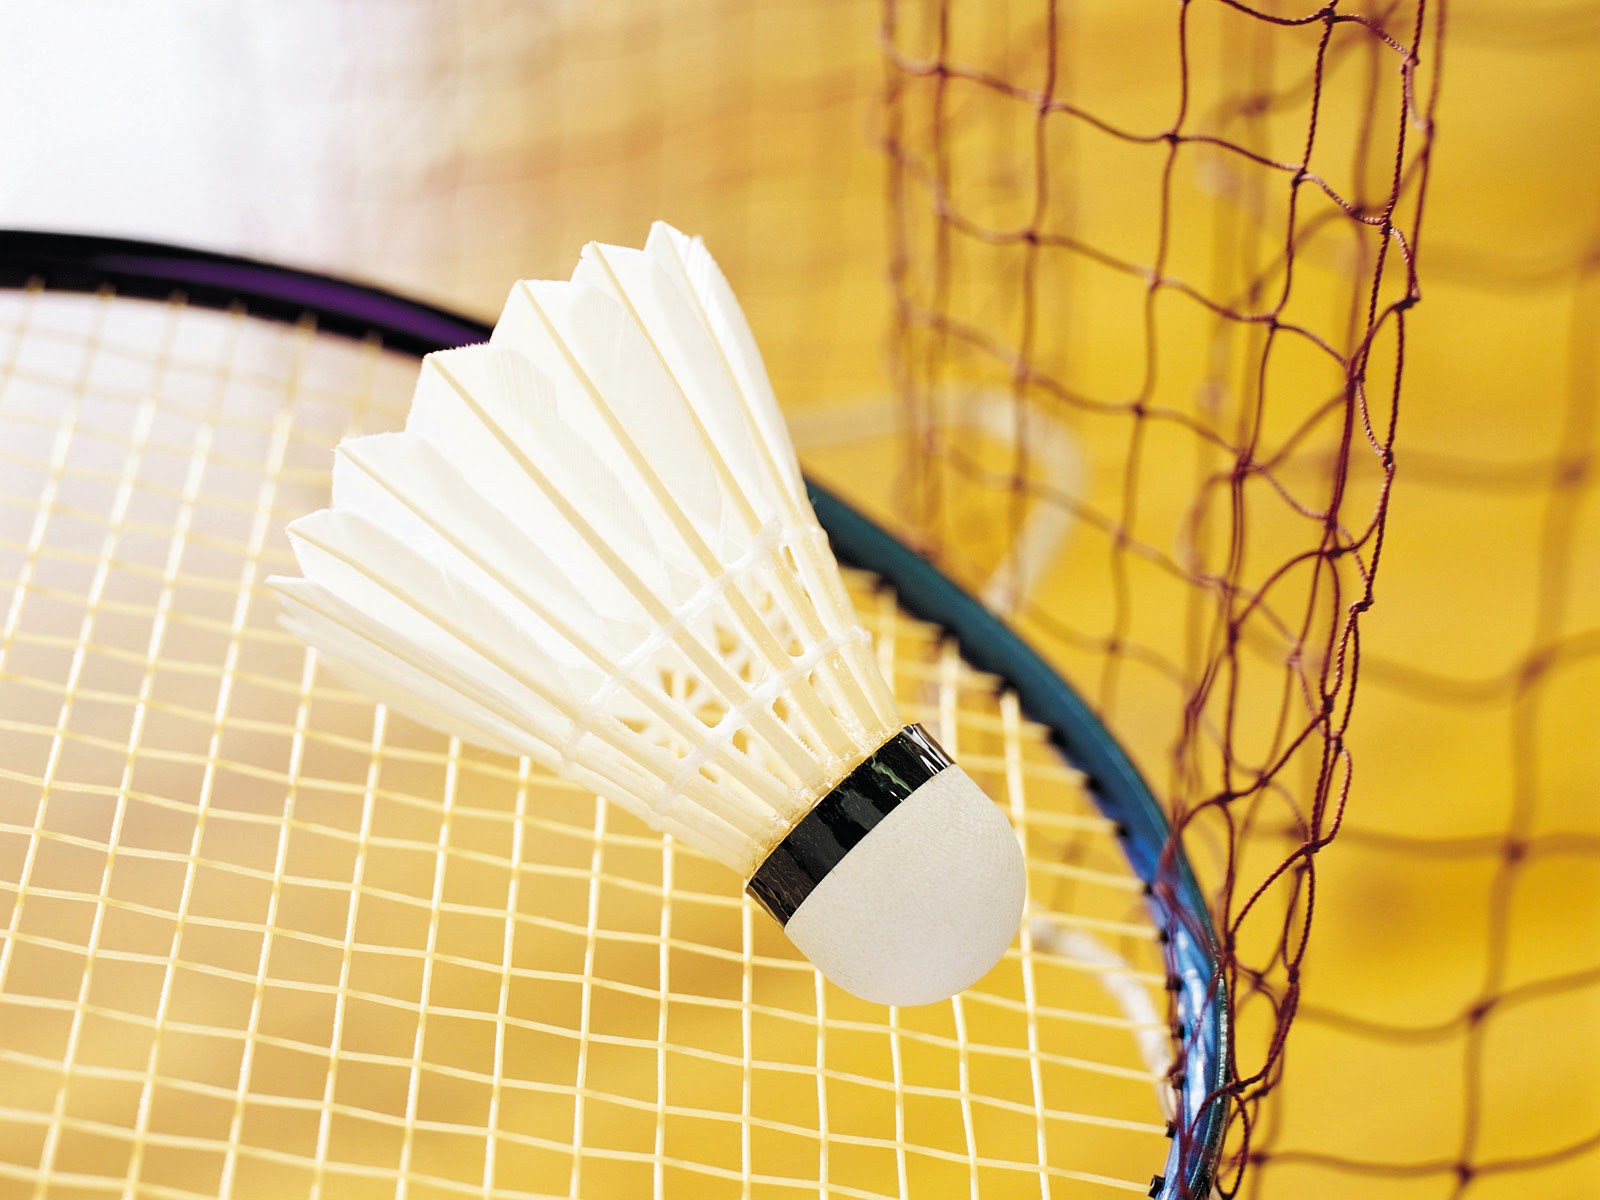 badminton hub online